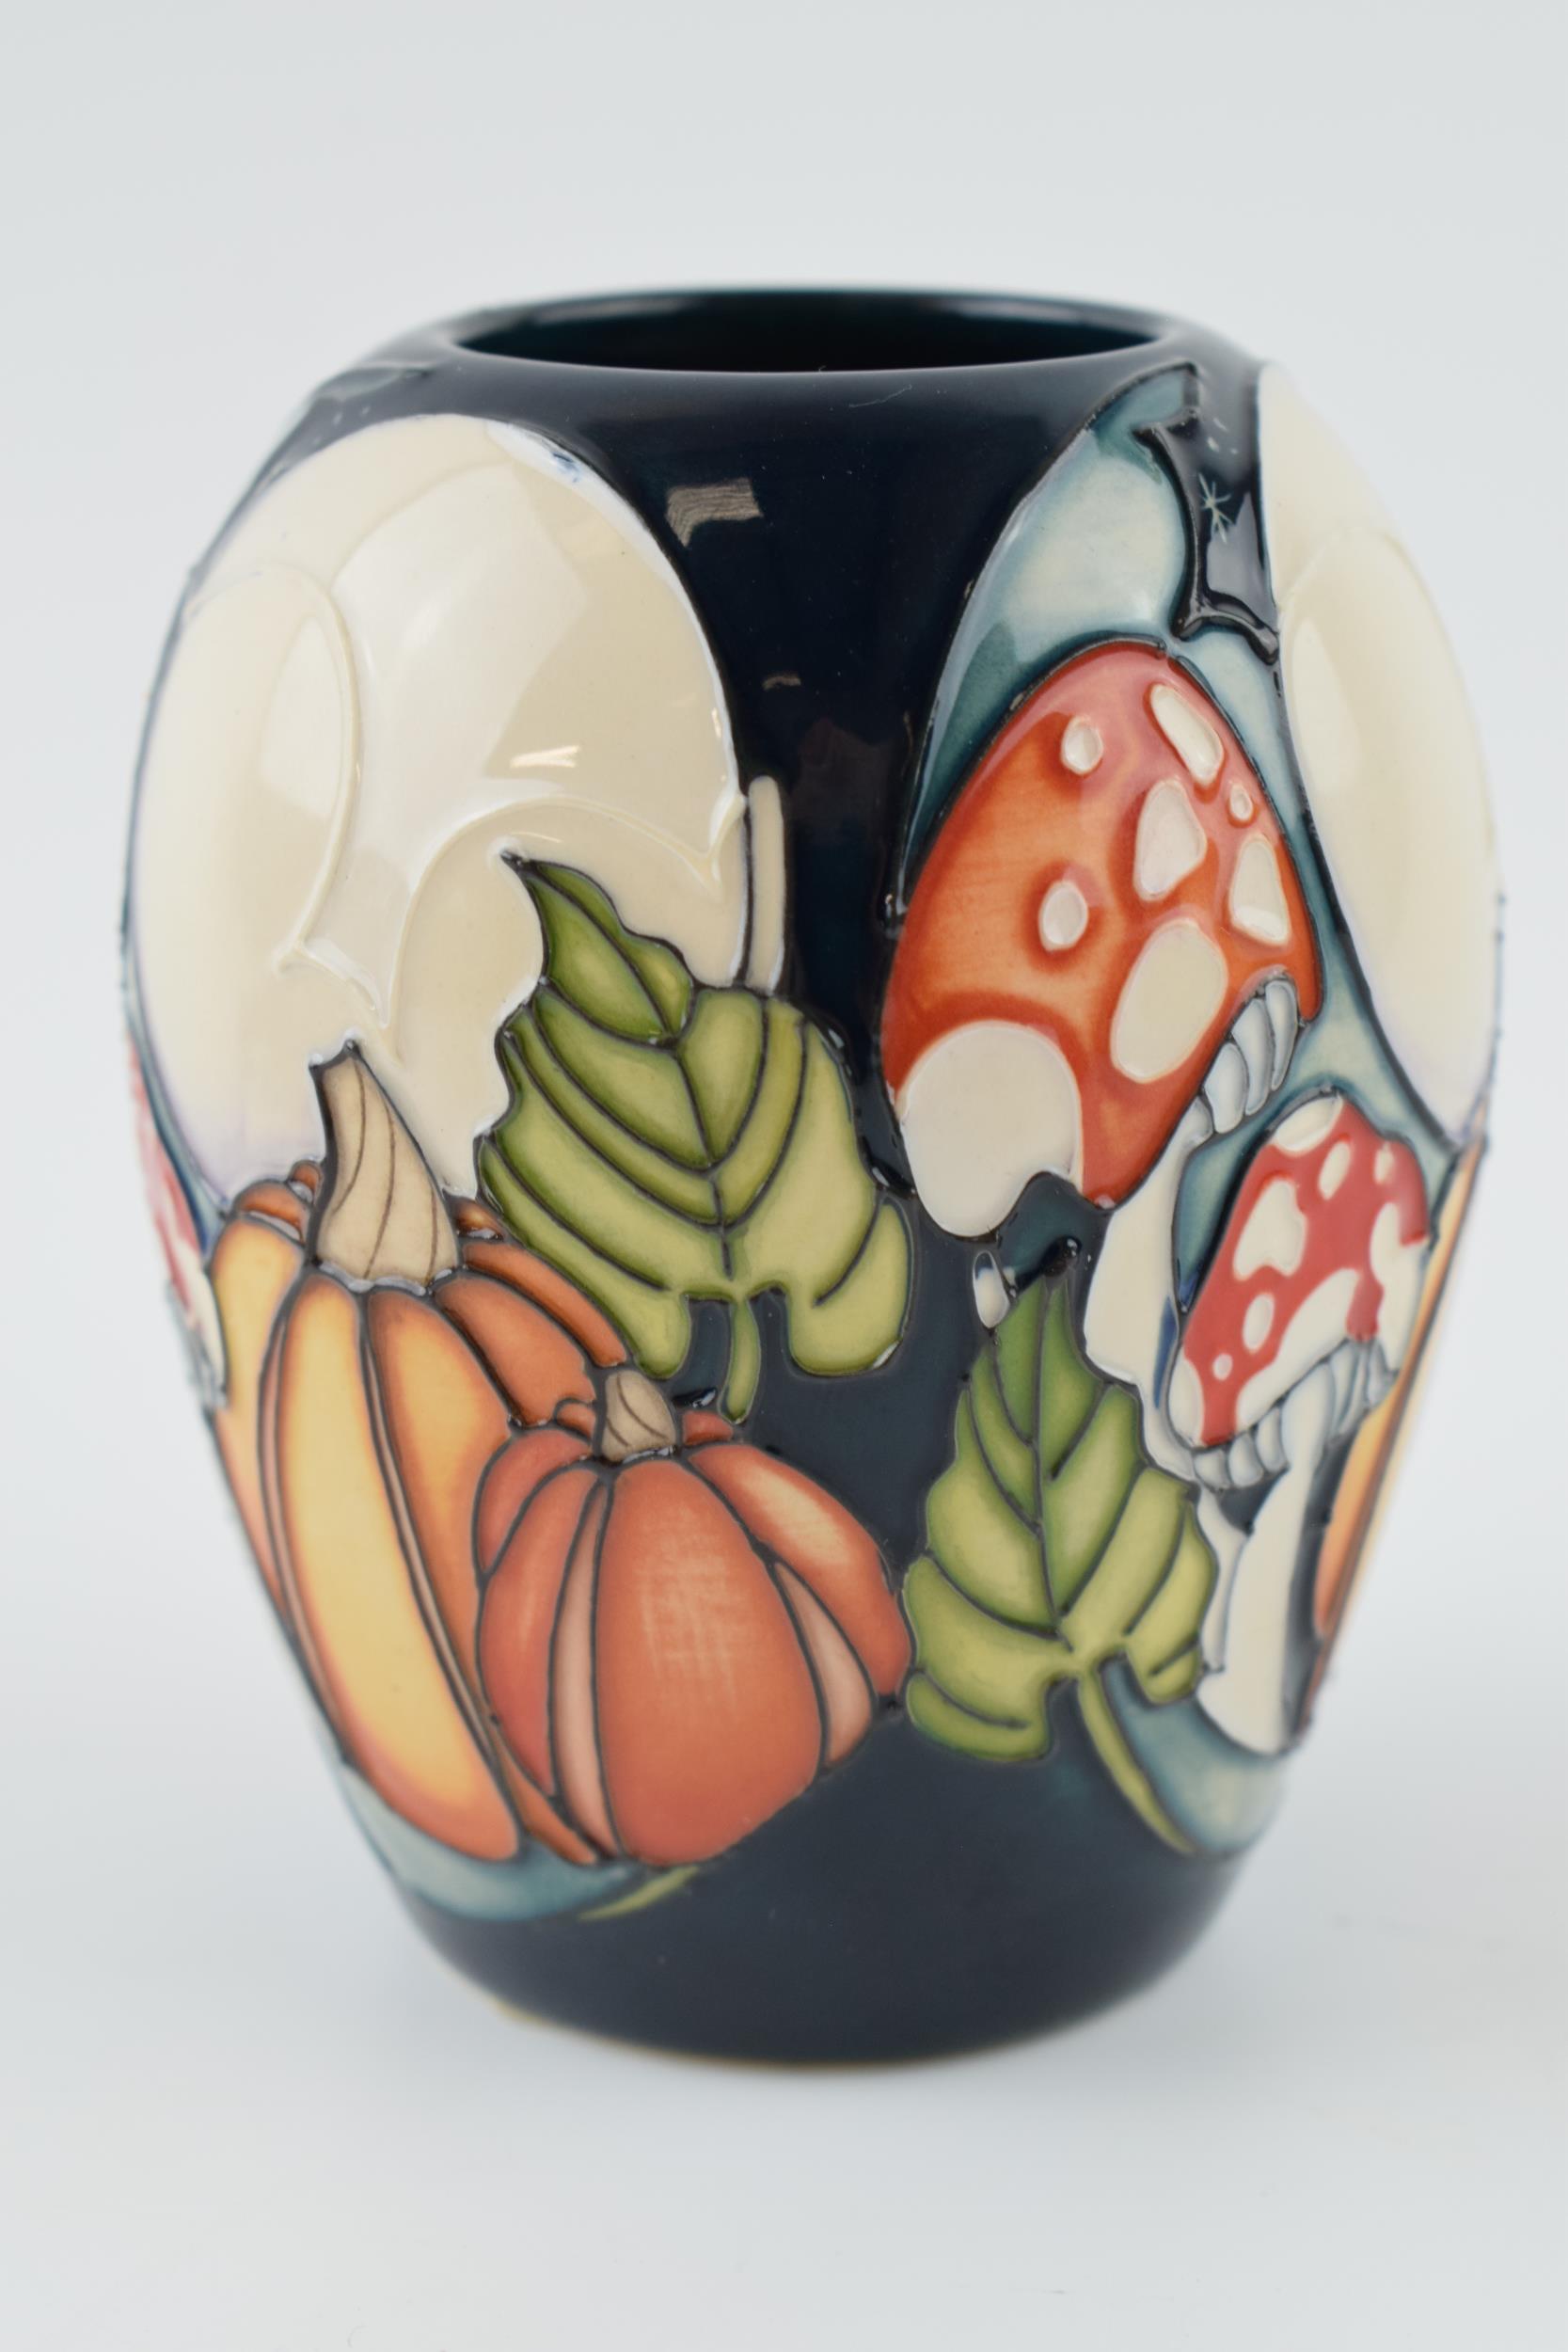 Moorcroft vase 102/3 in the Halloweve design, trial pattern, master vase, 9.5cm tall. In good